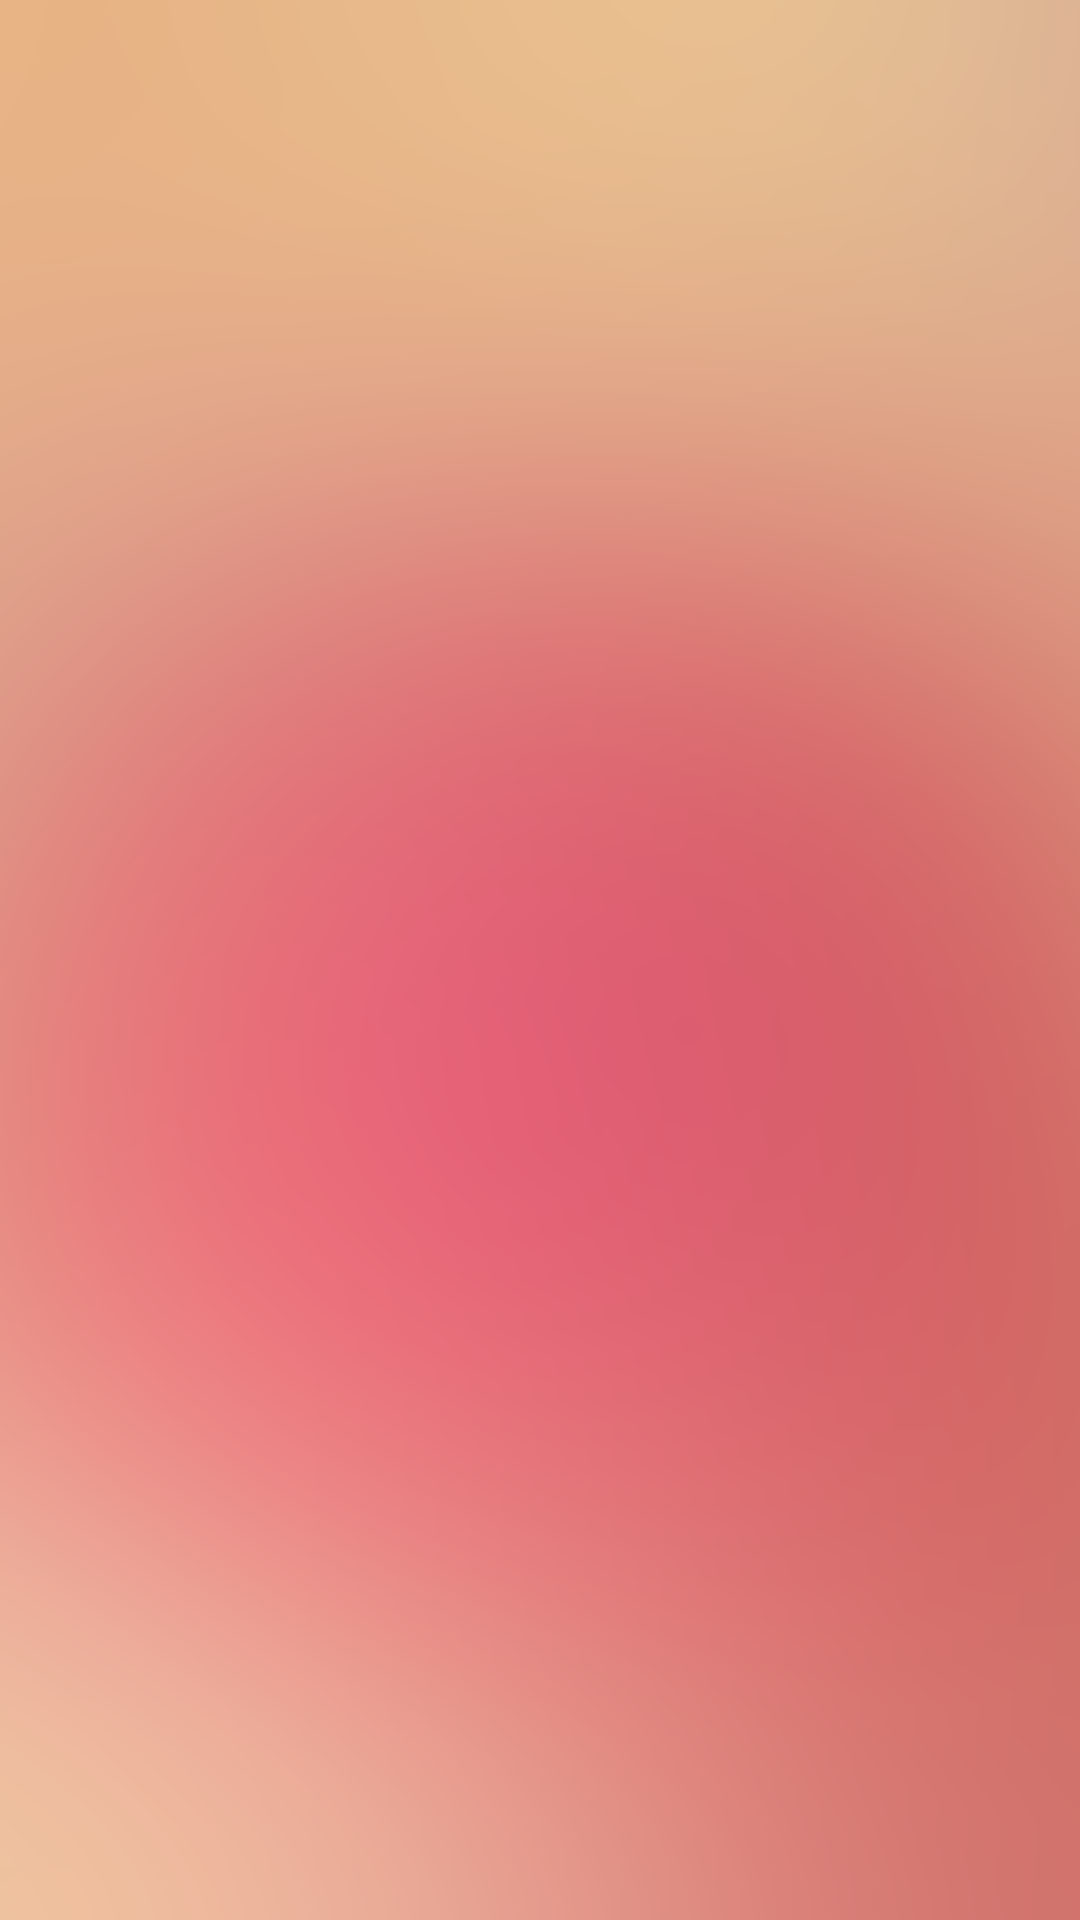 1080x1920 Orange Pink Minimal Gradient Android Wallpaper ...